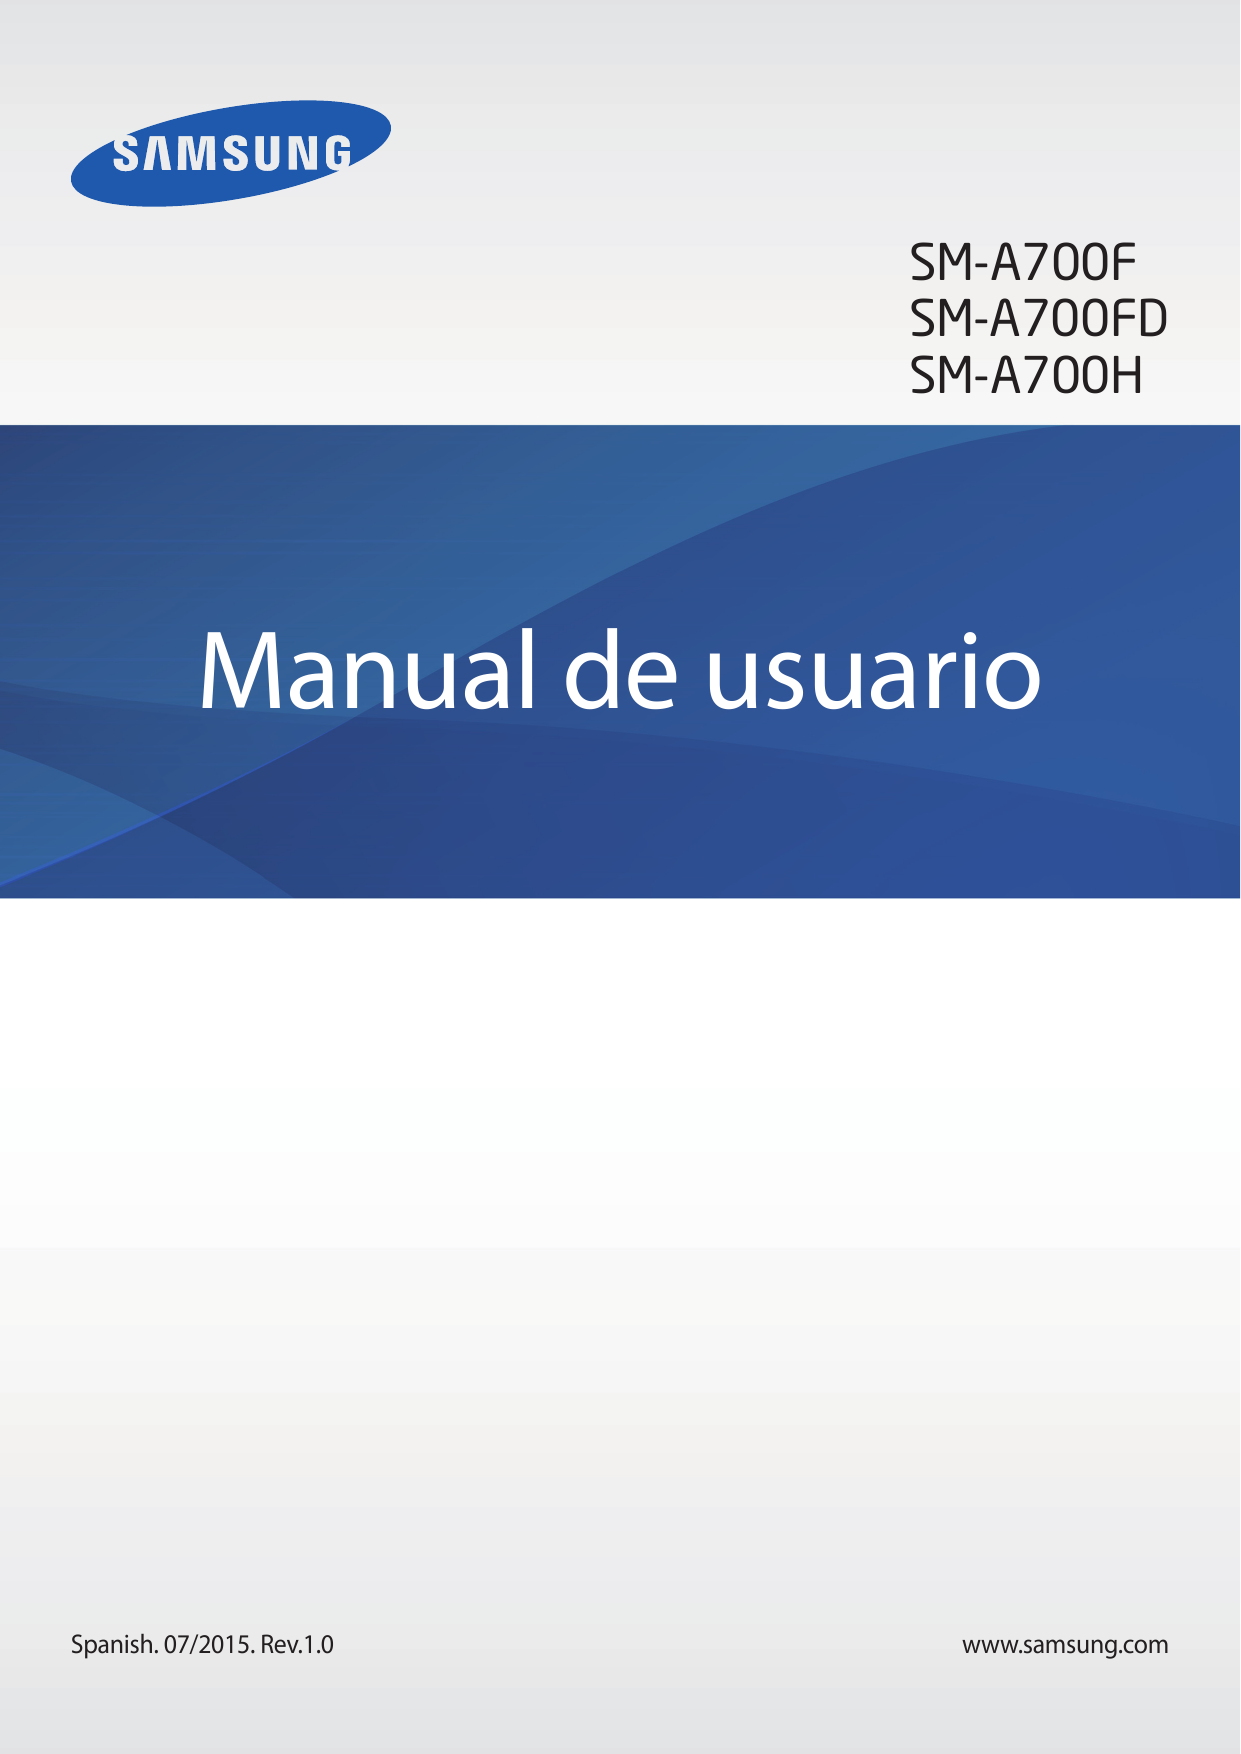 SM-A700FSM-A700FDSM-A700HManual de usuarioSpanish. 07/2015. Rev.1.0www.samsung.com